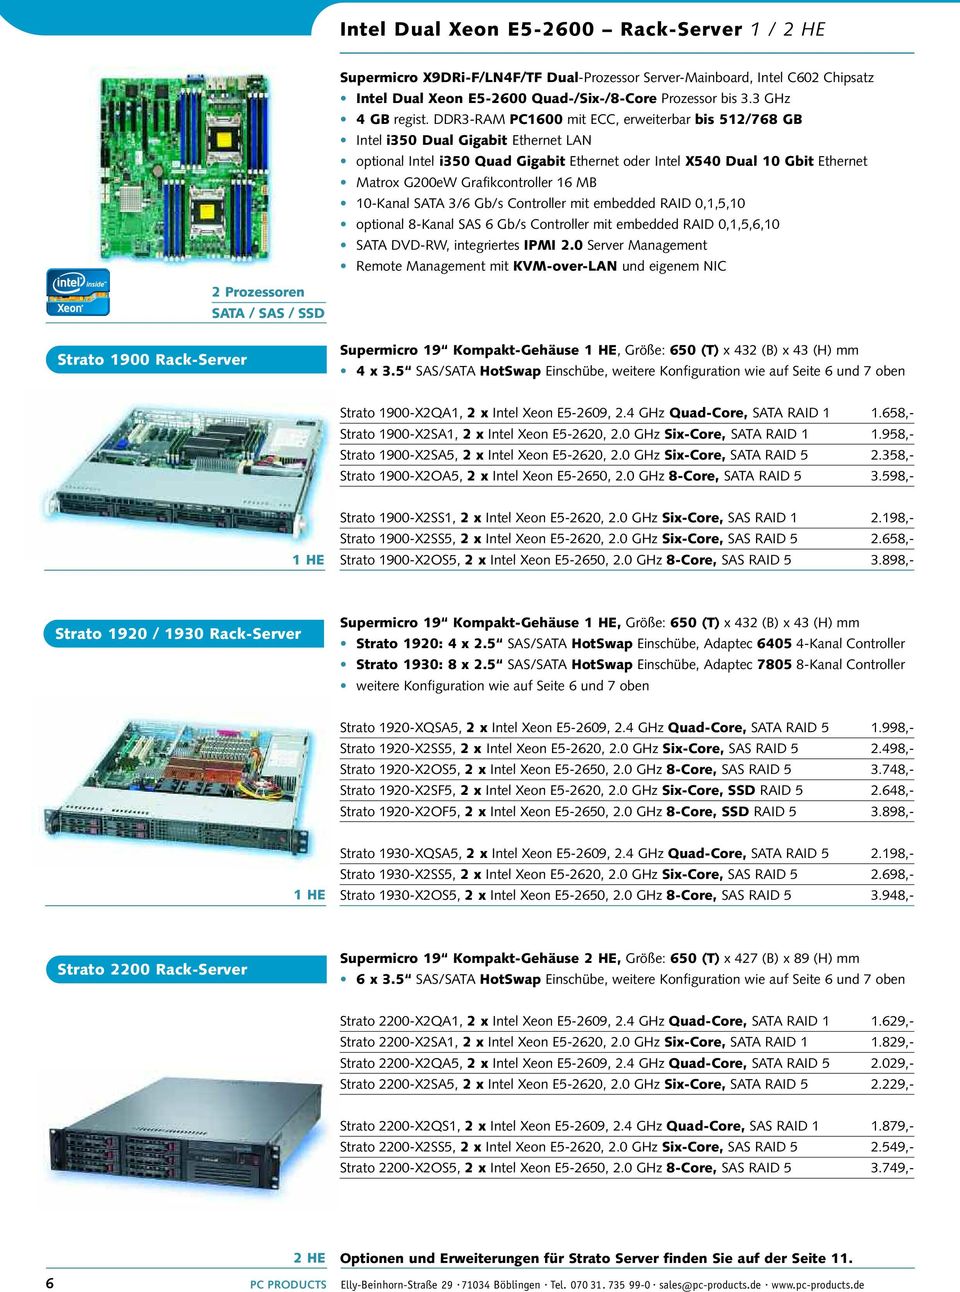 16 MB 10-Kanal SATA 3/6 Gb/s Controller mit embedded RAID 0,1,5,10 optional 8-Kanal SAS 6 Gb/s Controller mit embedded RAID 0,1,5,6,10 SATA DVD-RW, integriertes IPMI 2.